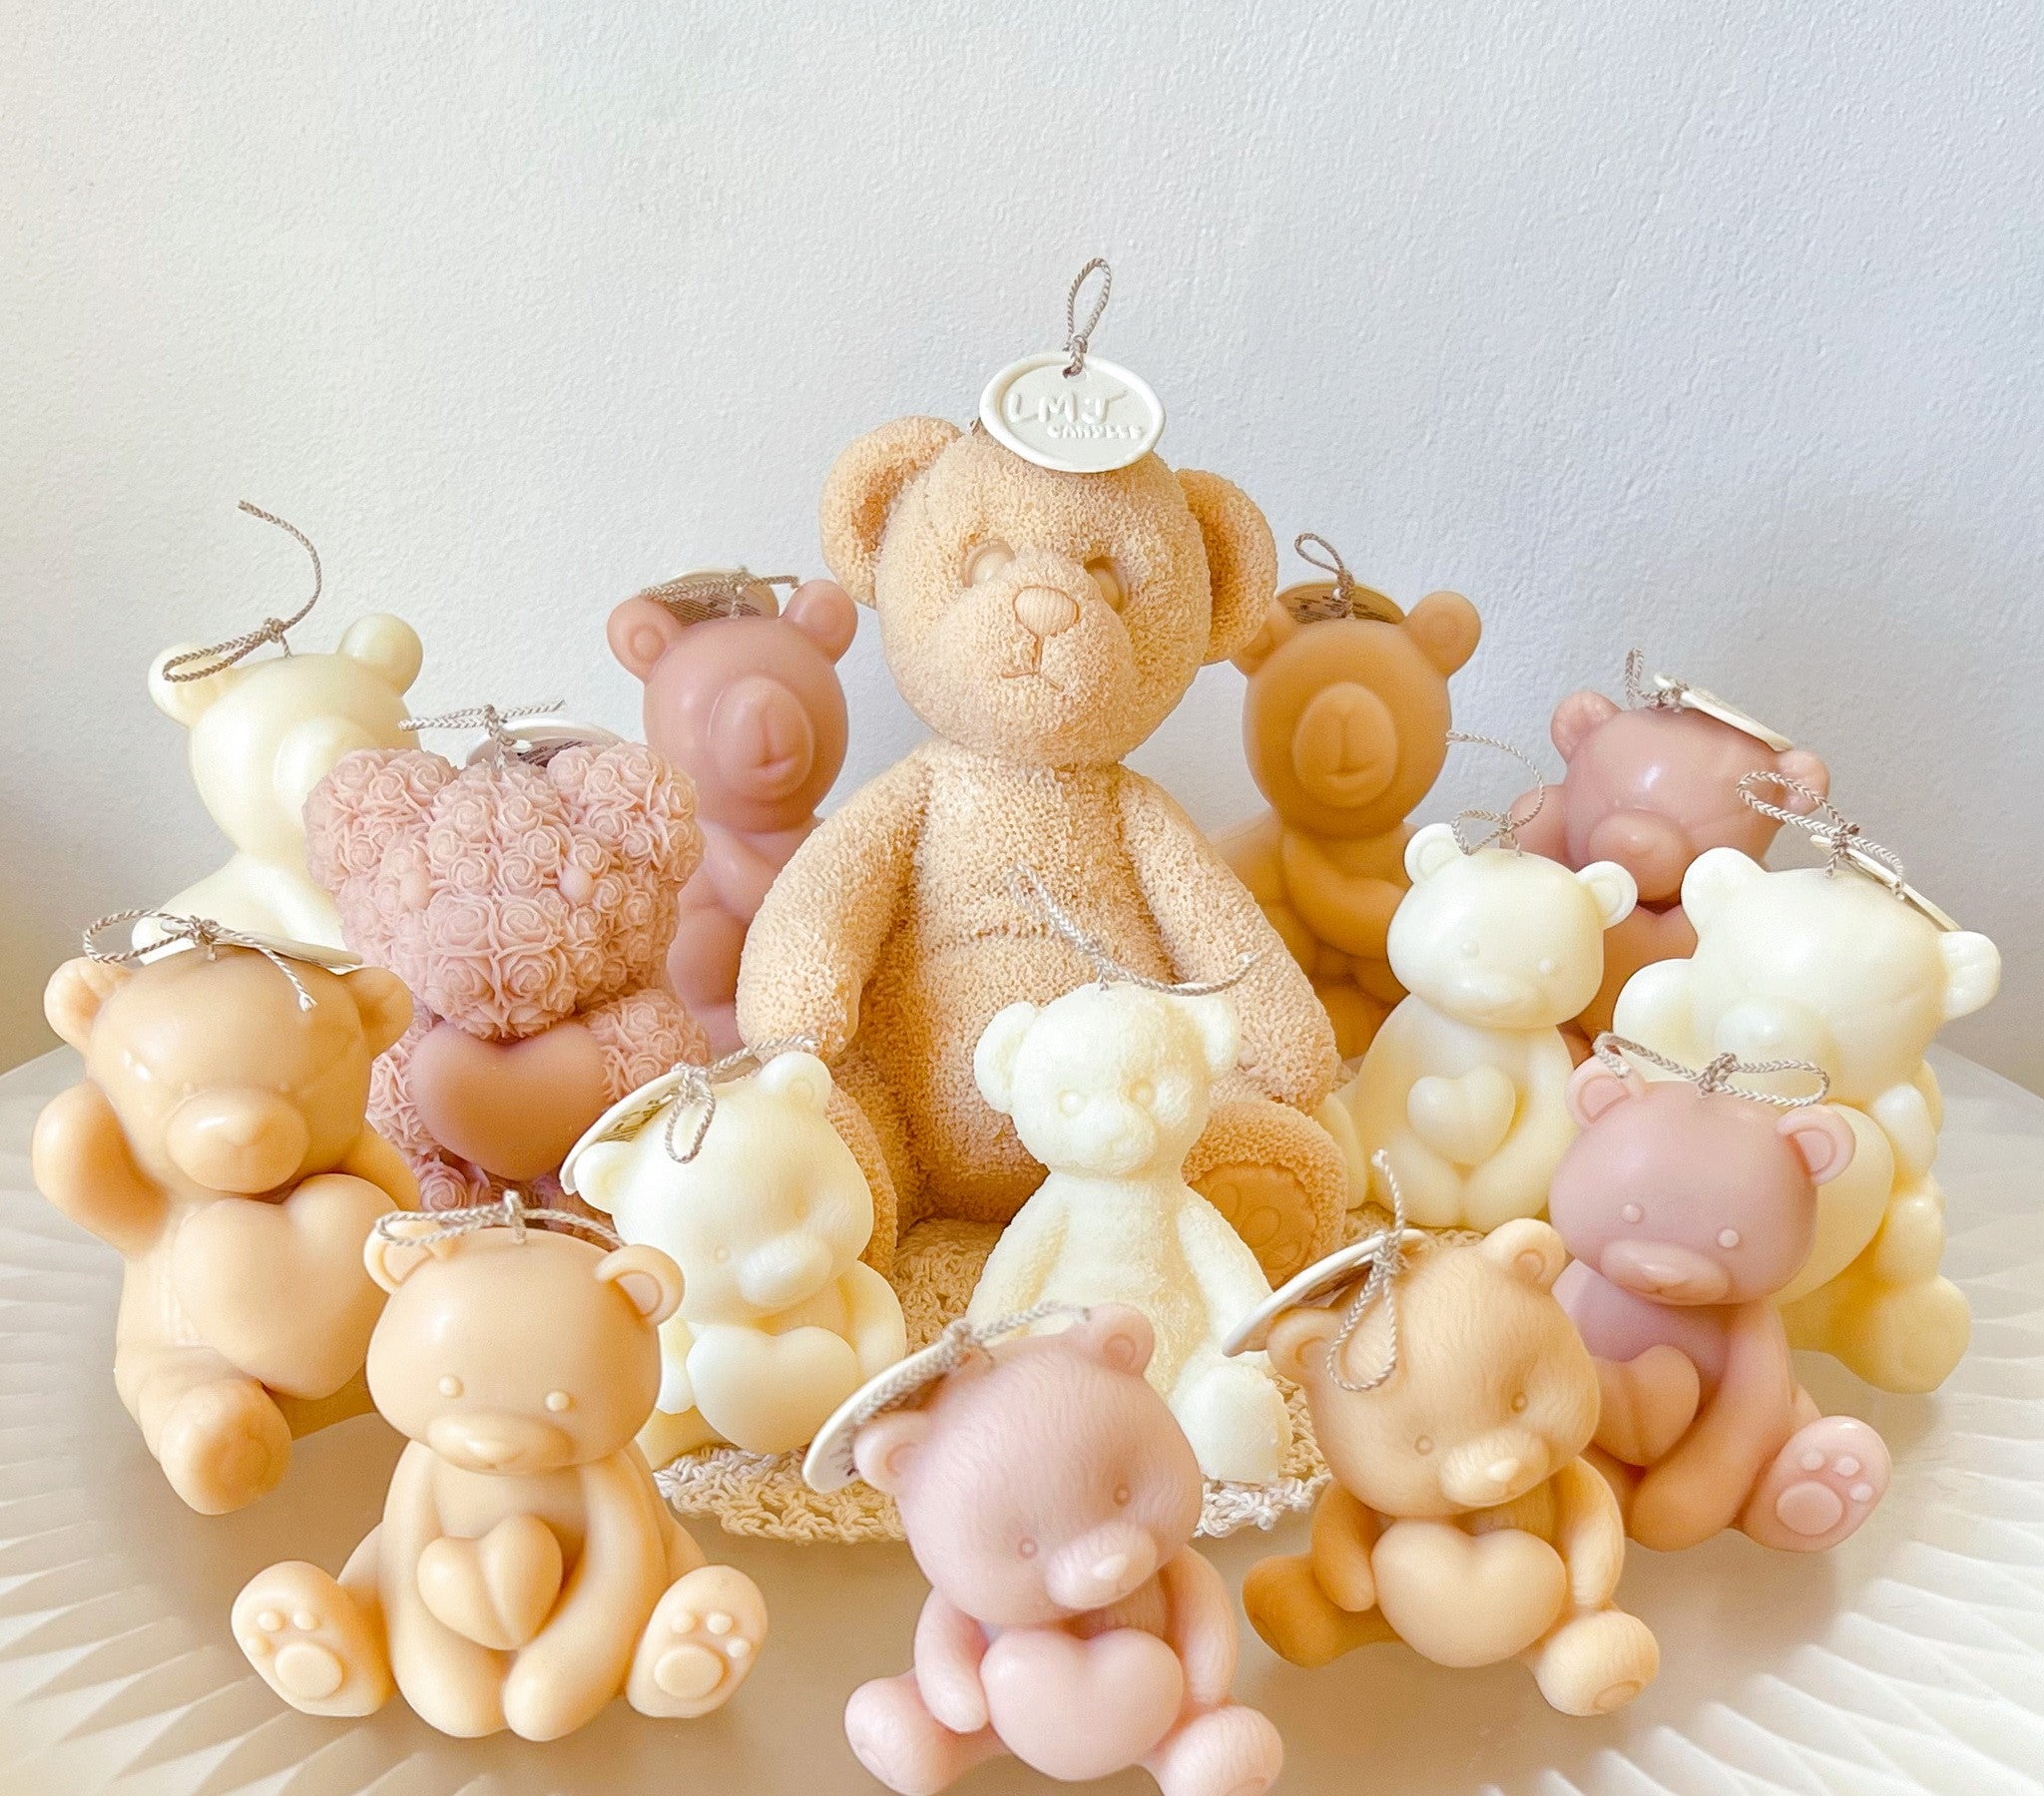 Handmade teddy bear candles, soy wax candles, LMJ Candles